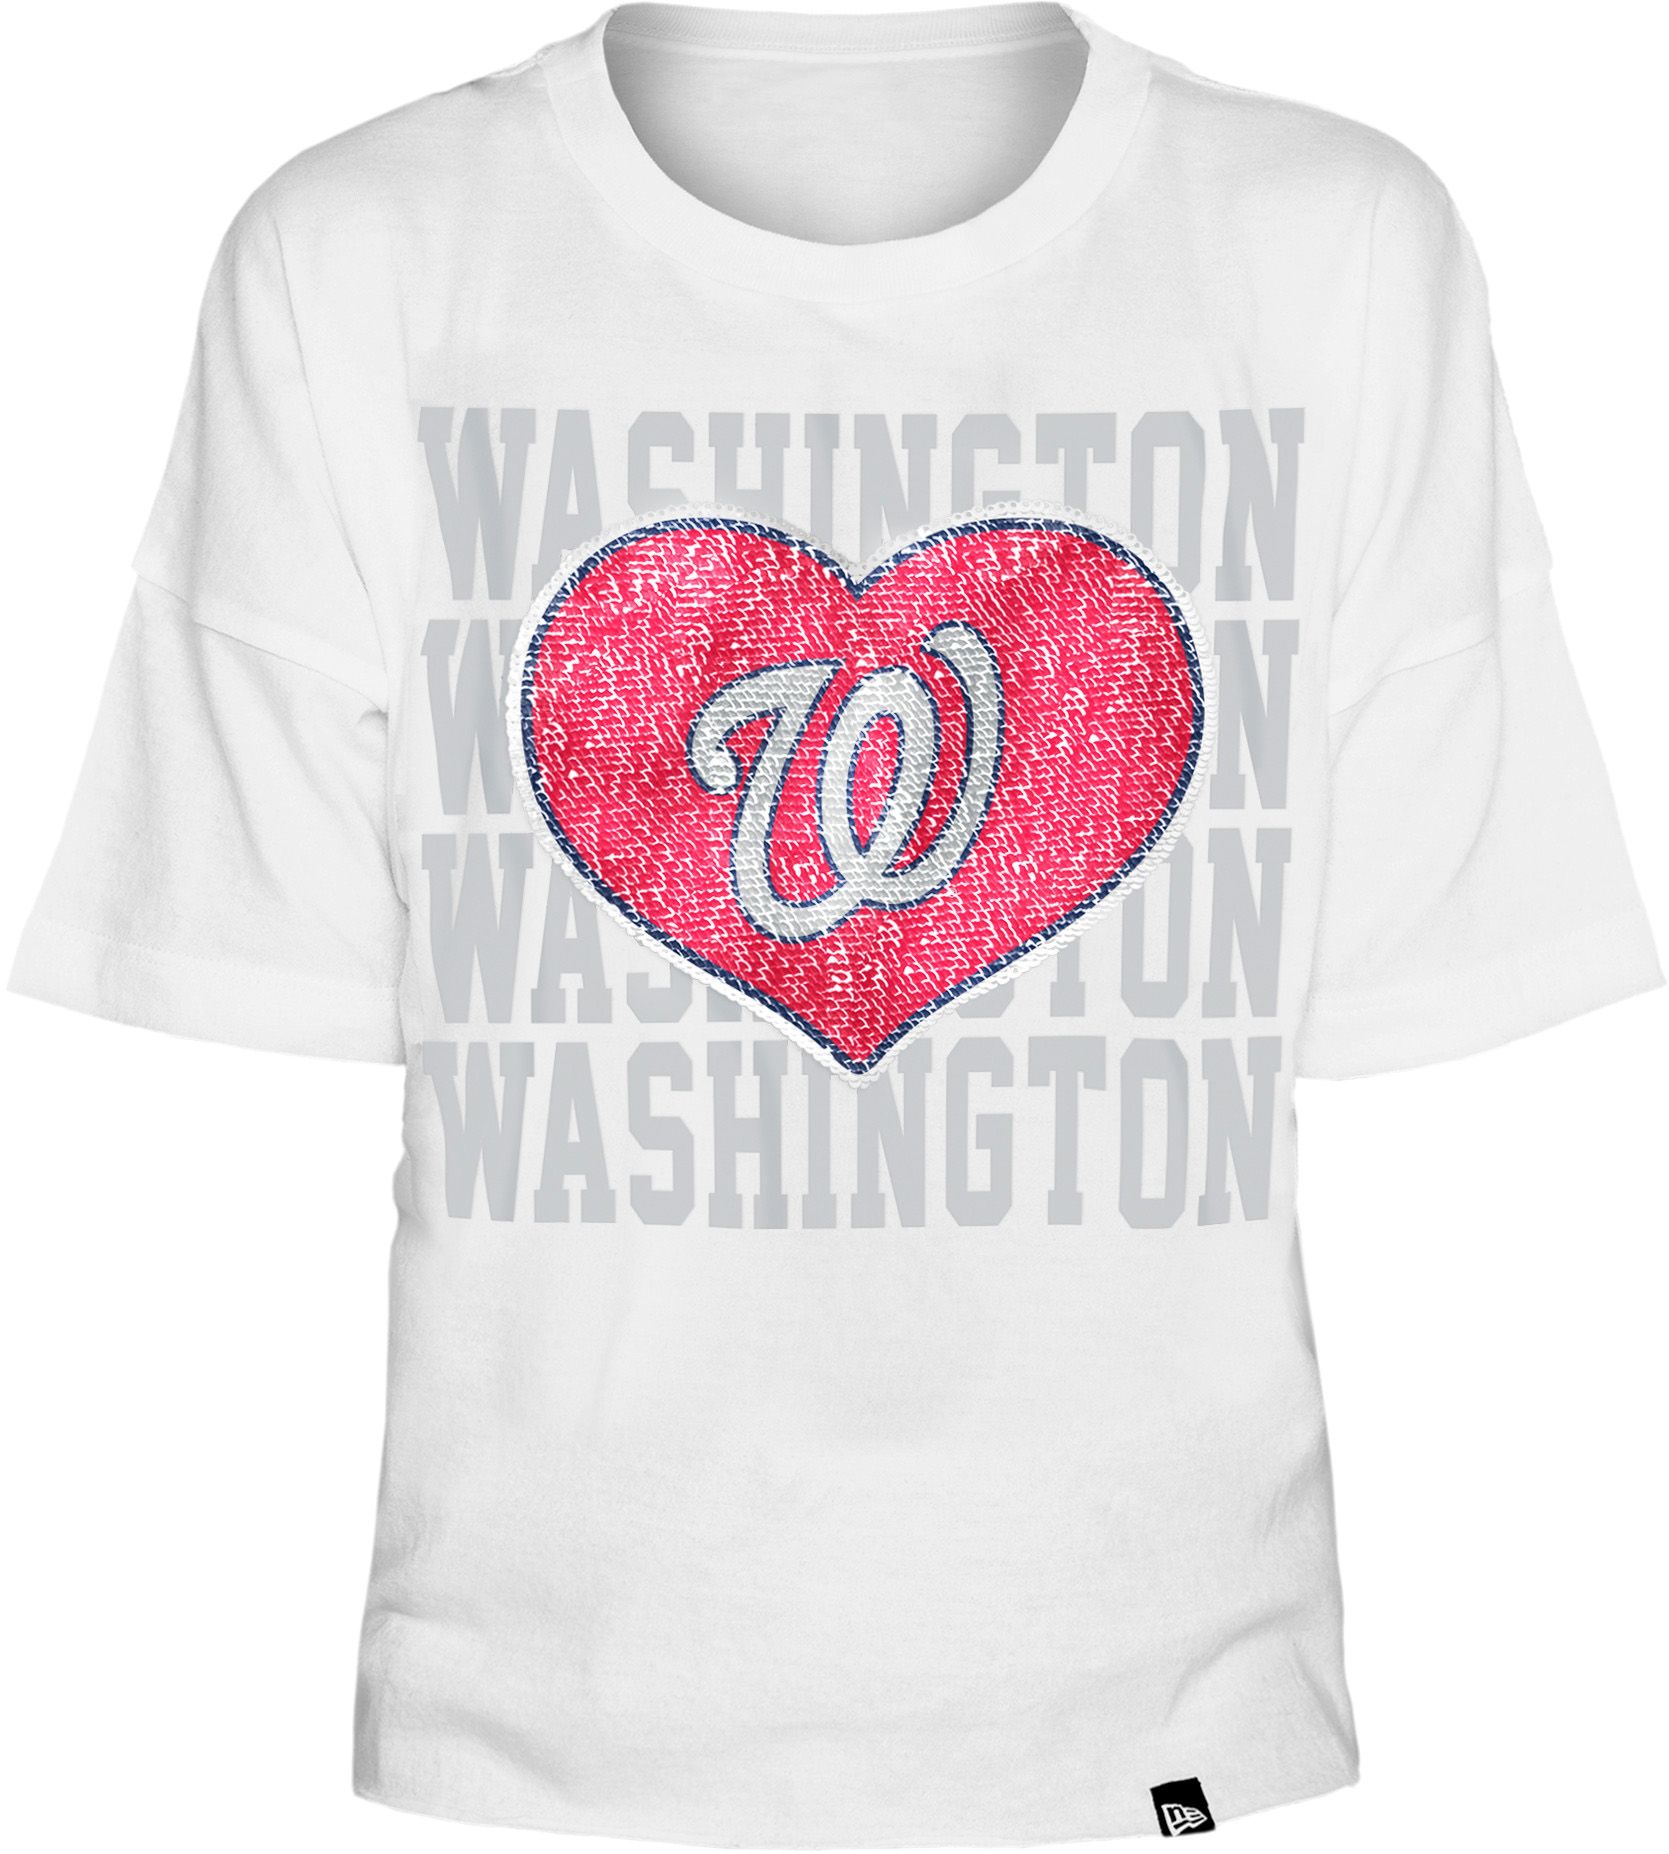 New Era / Youth Girls' Washington Nationals White Heart T-Shirt